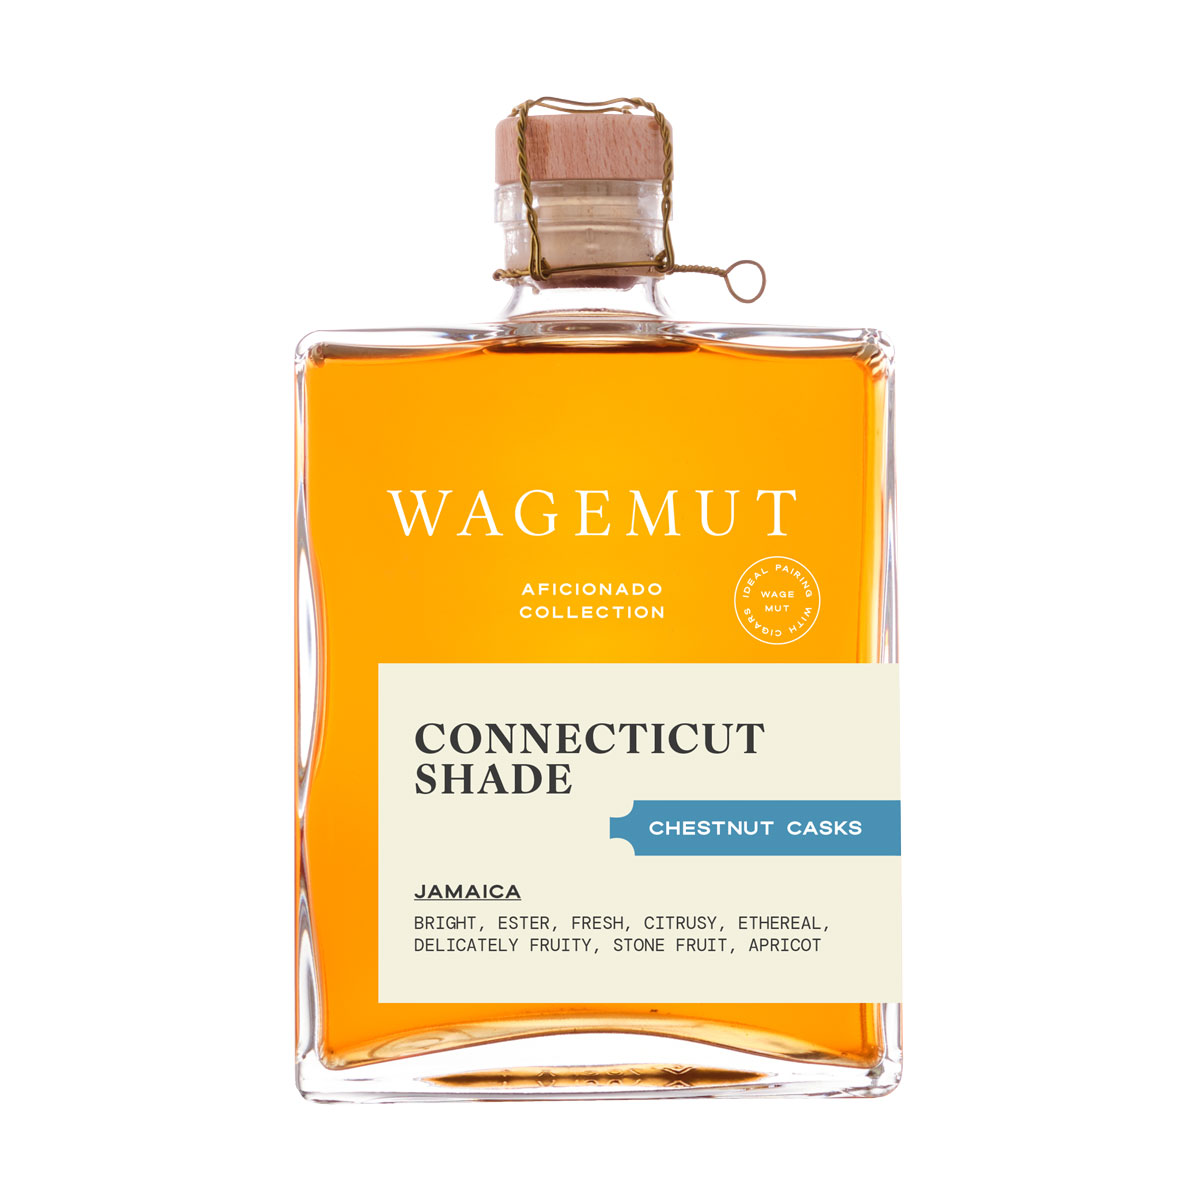 WAGEMUT Aficionado Collection Connecticut Shade